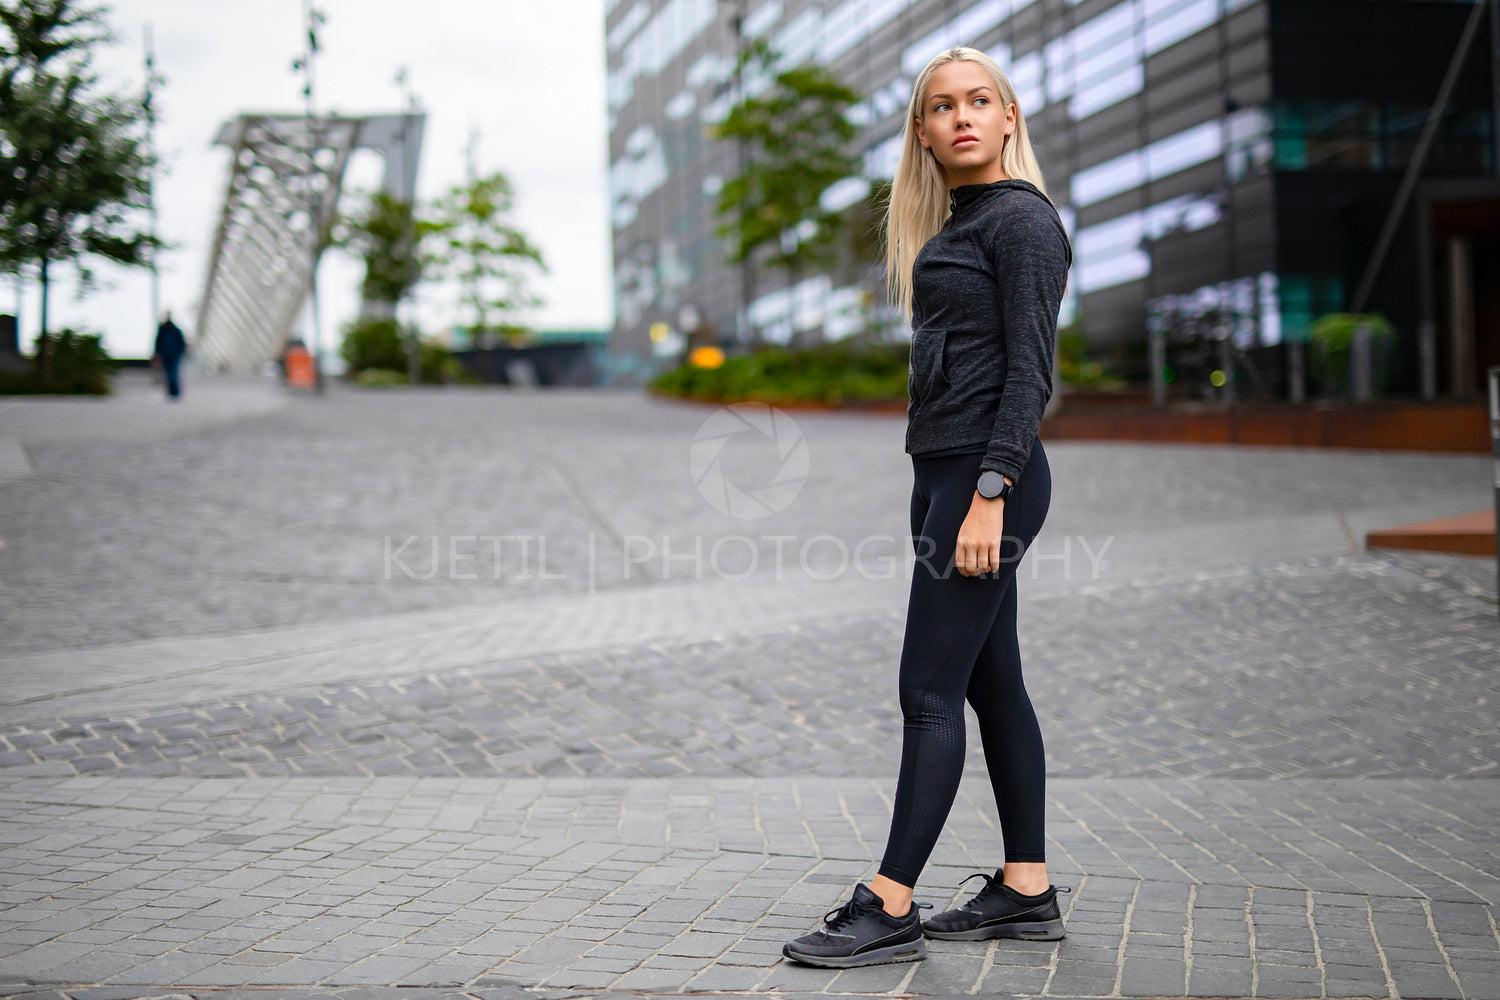 Beautiful urban scandinavian woman in workout outfit standing in city